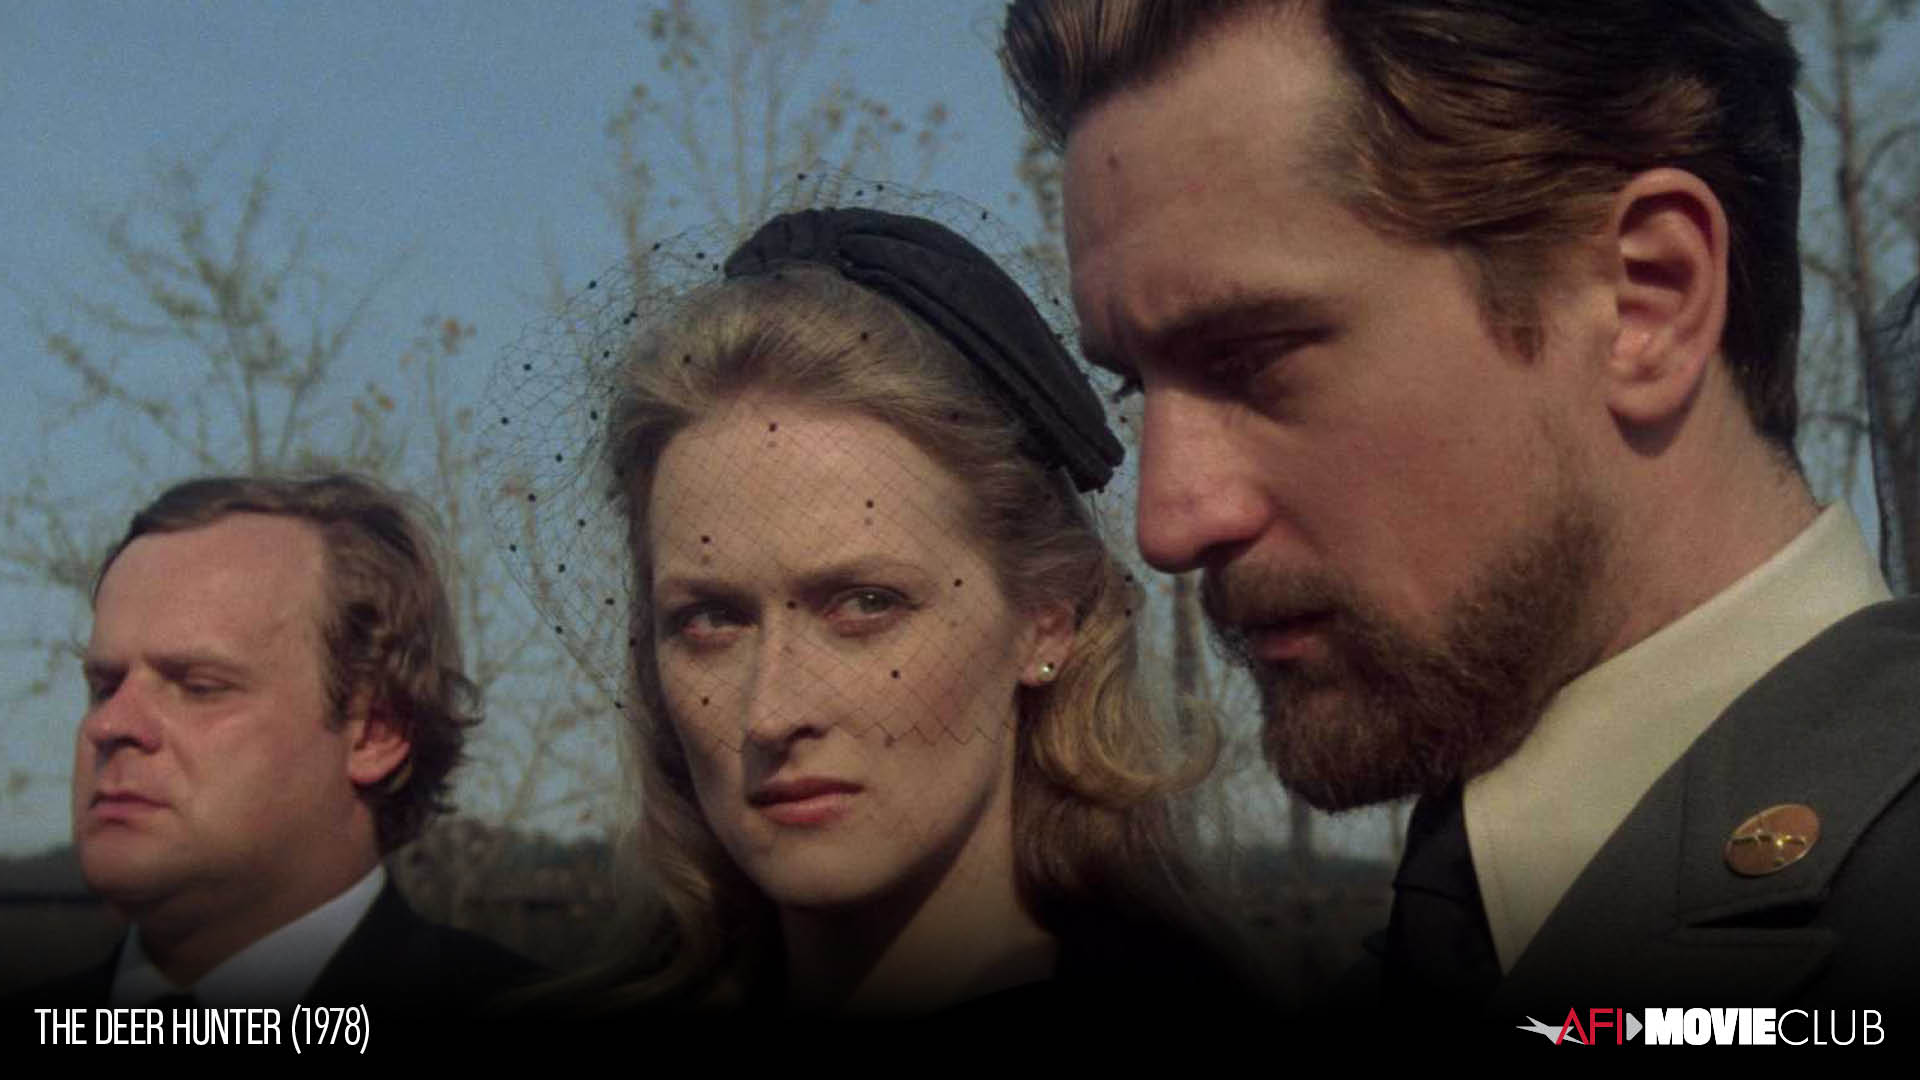 The Deer Hunter Film Still - Robert De Niro and Meryl Streep